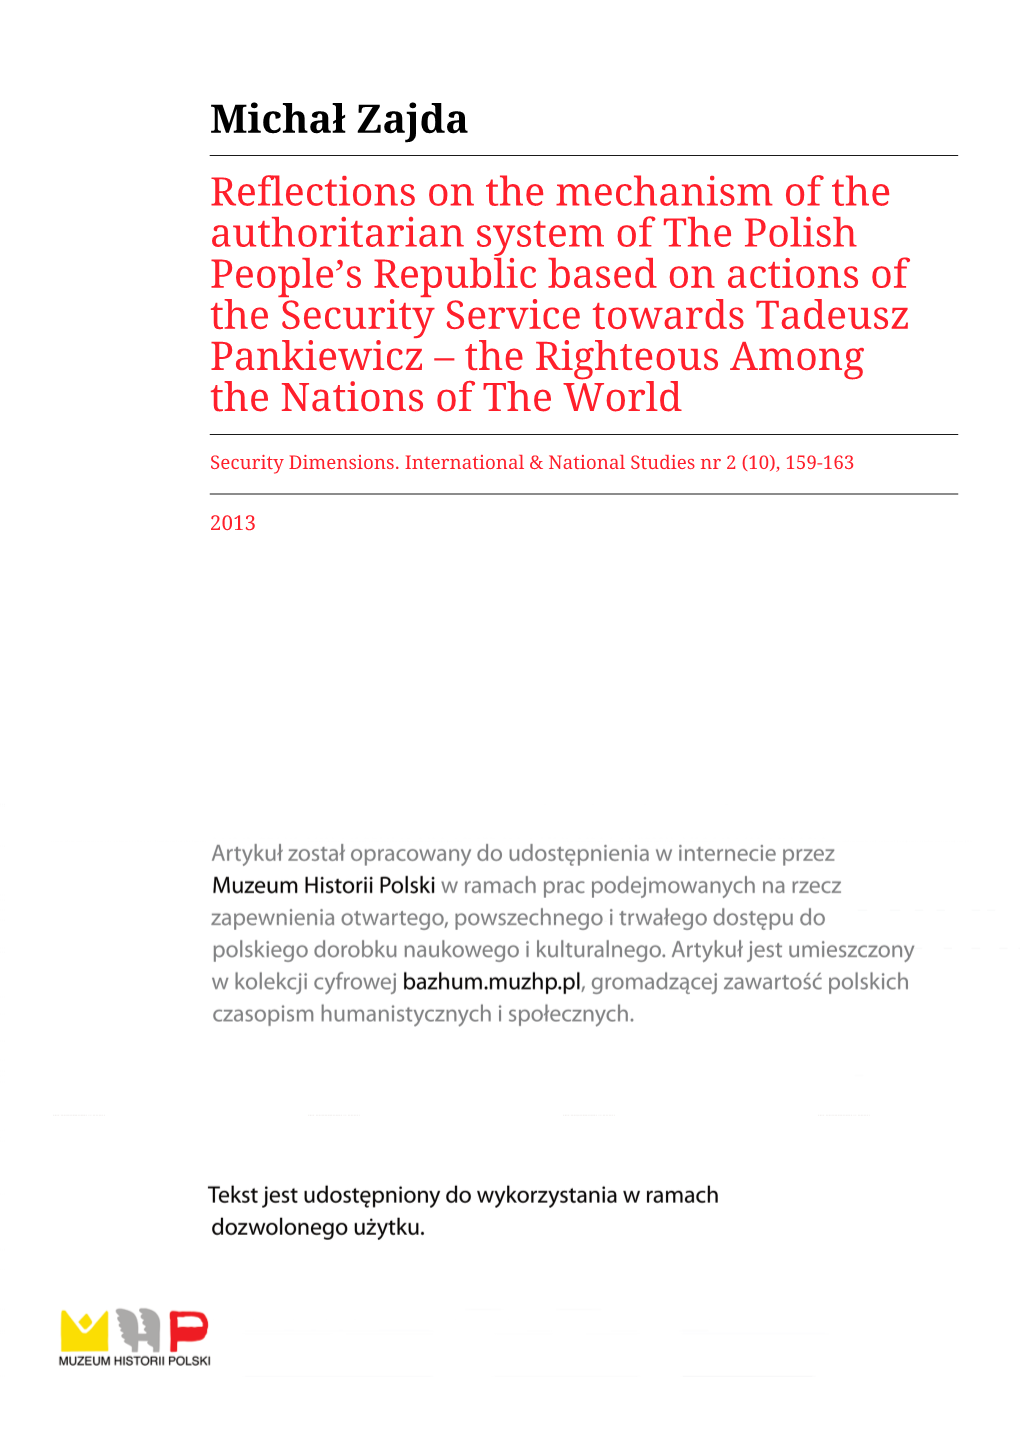 Michał Zajda Reflections on the Mechanism of the Authoritarian